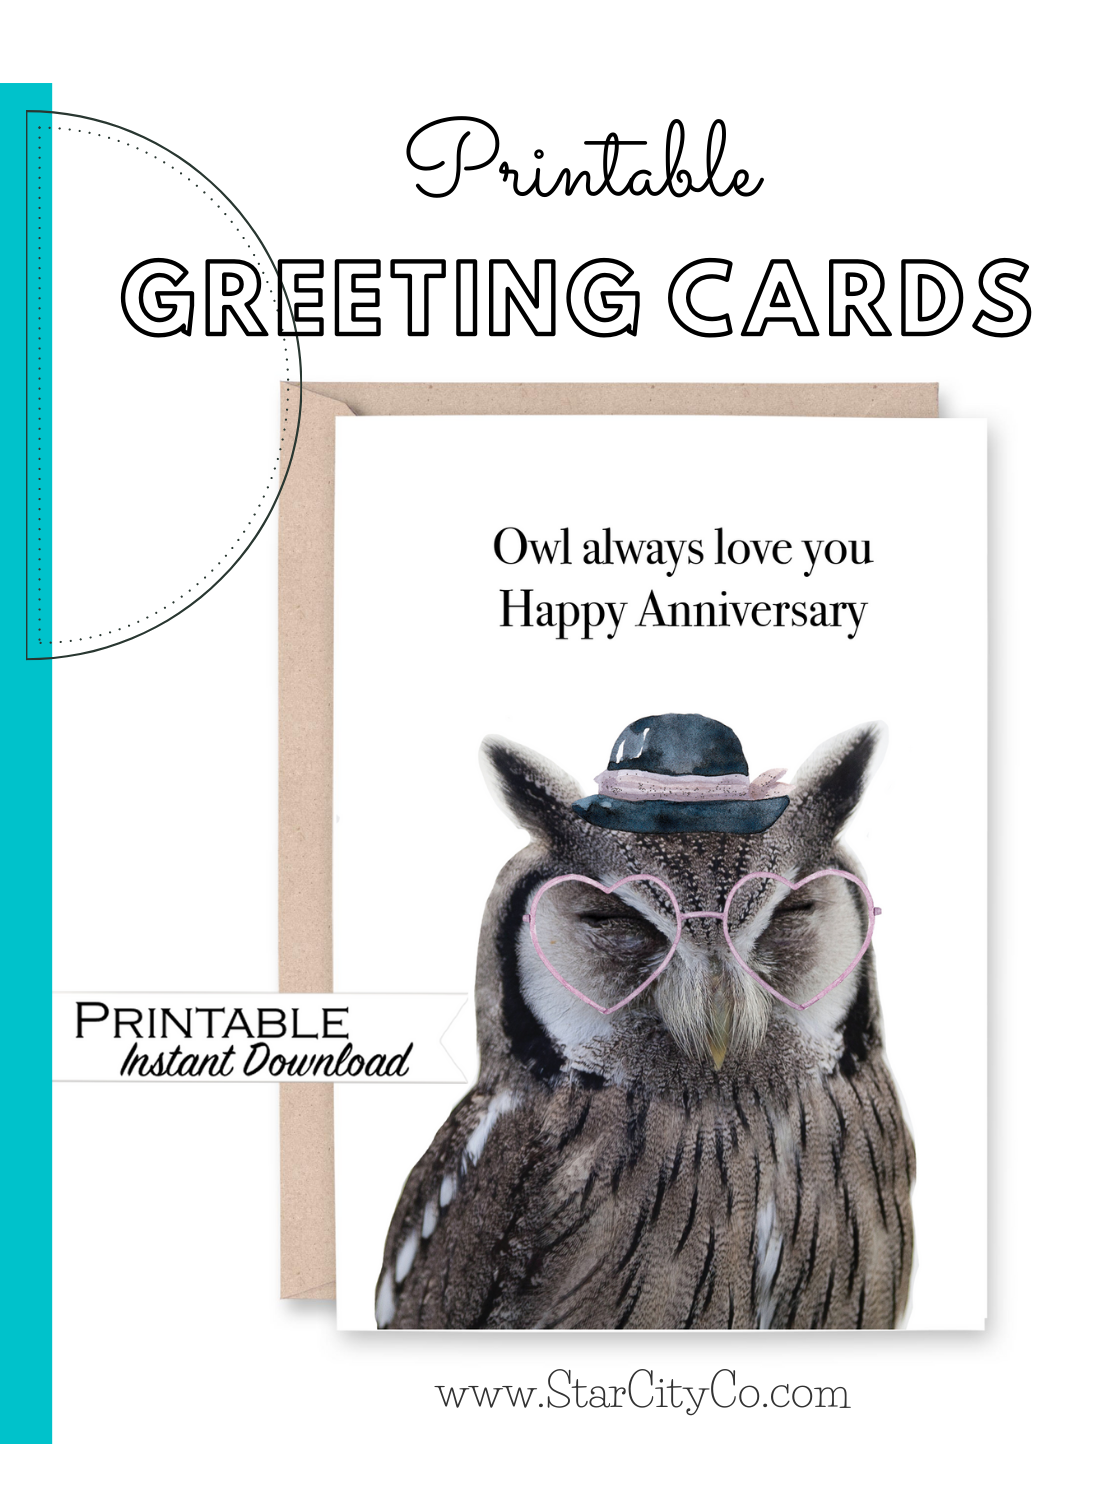 Owl Always Love You Anniversary Card Printable - Digital Download